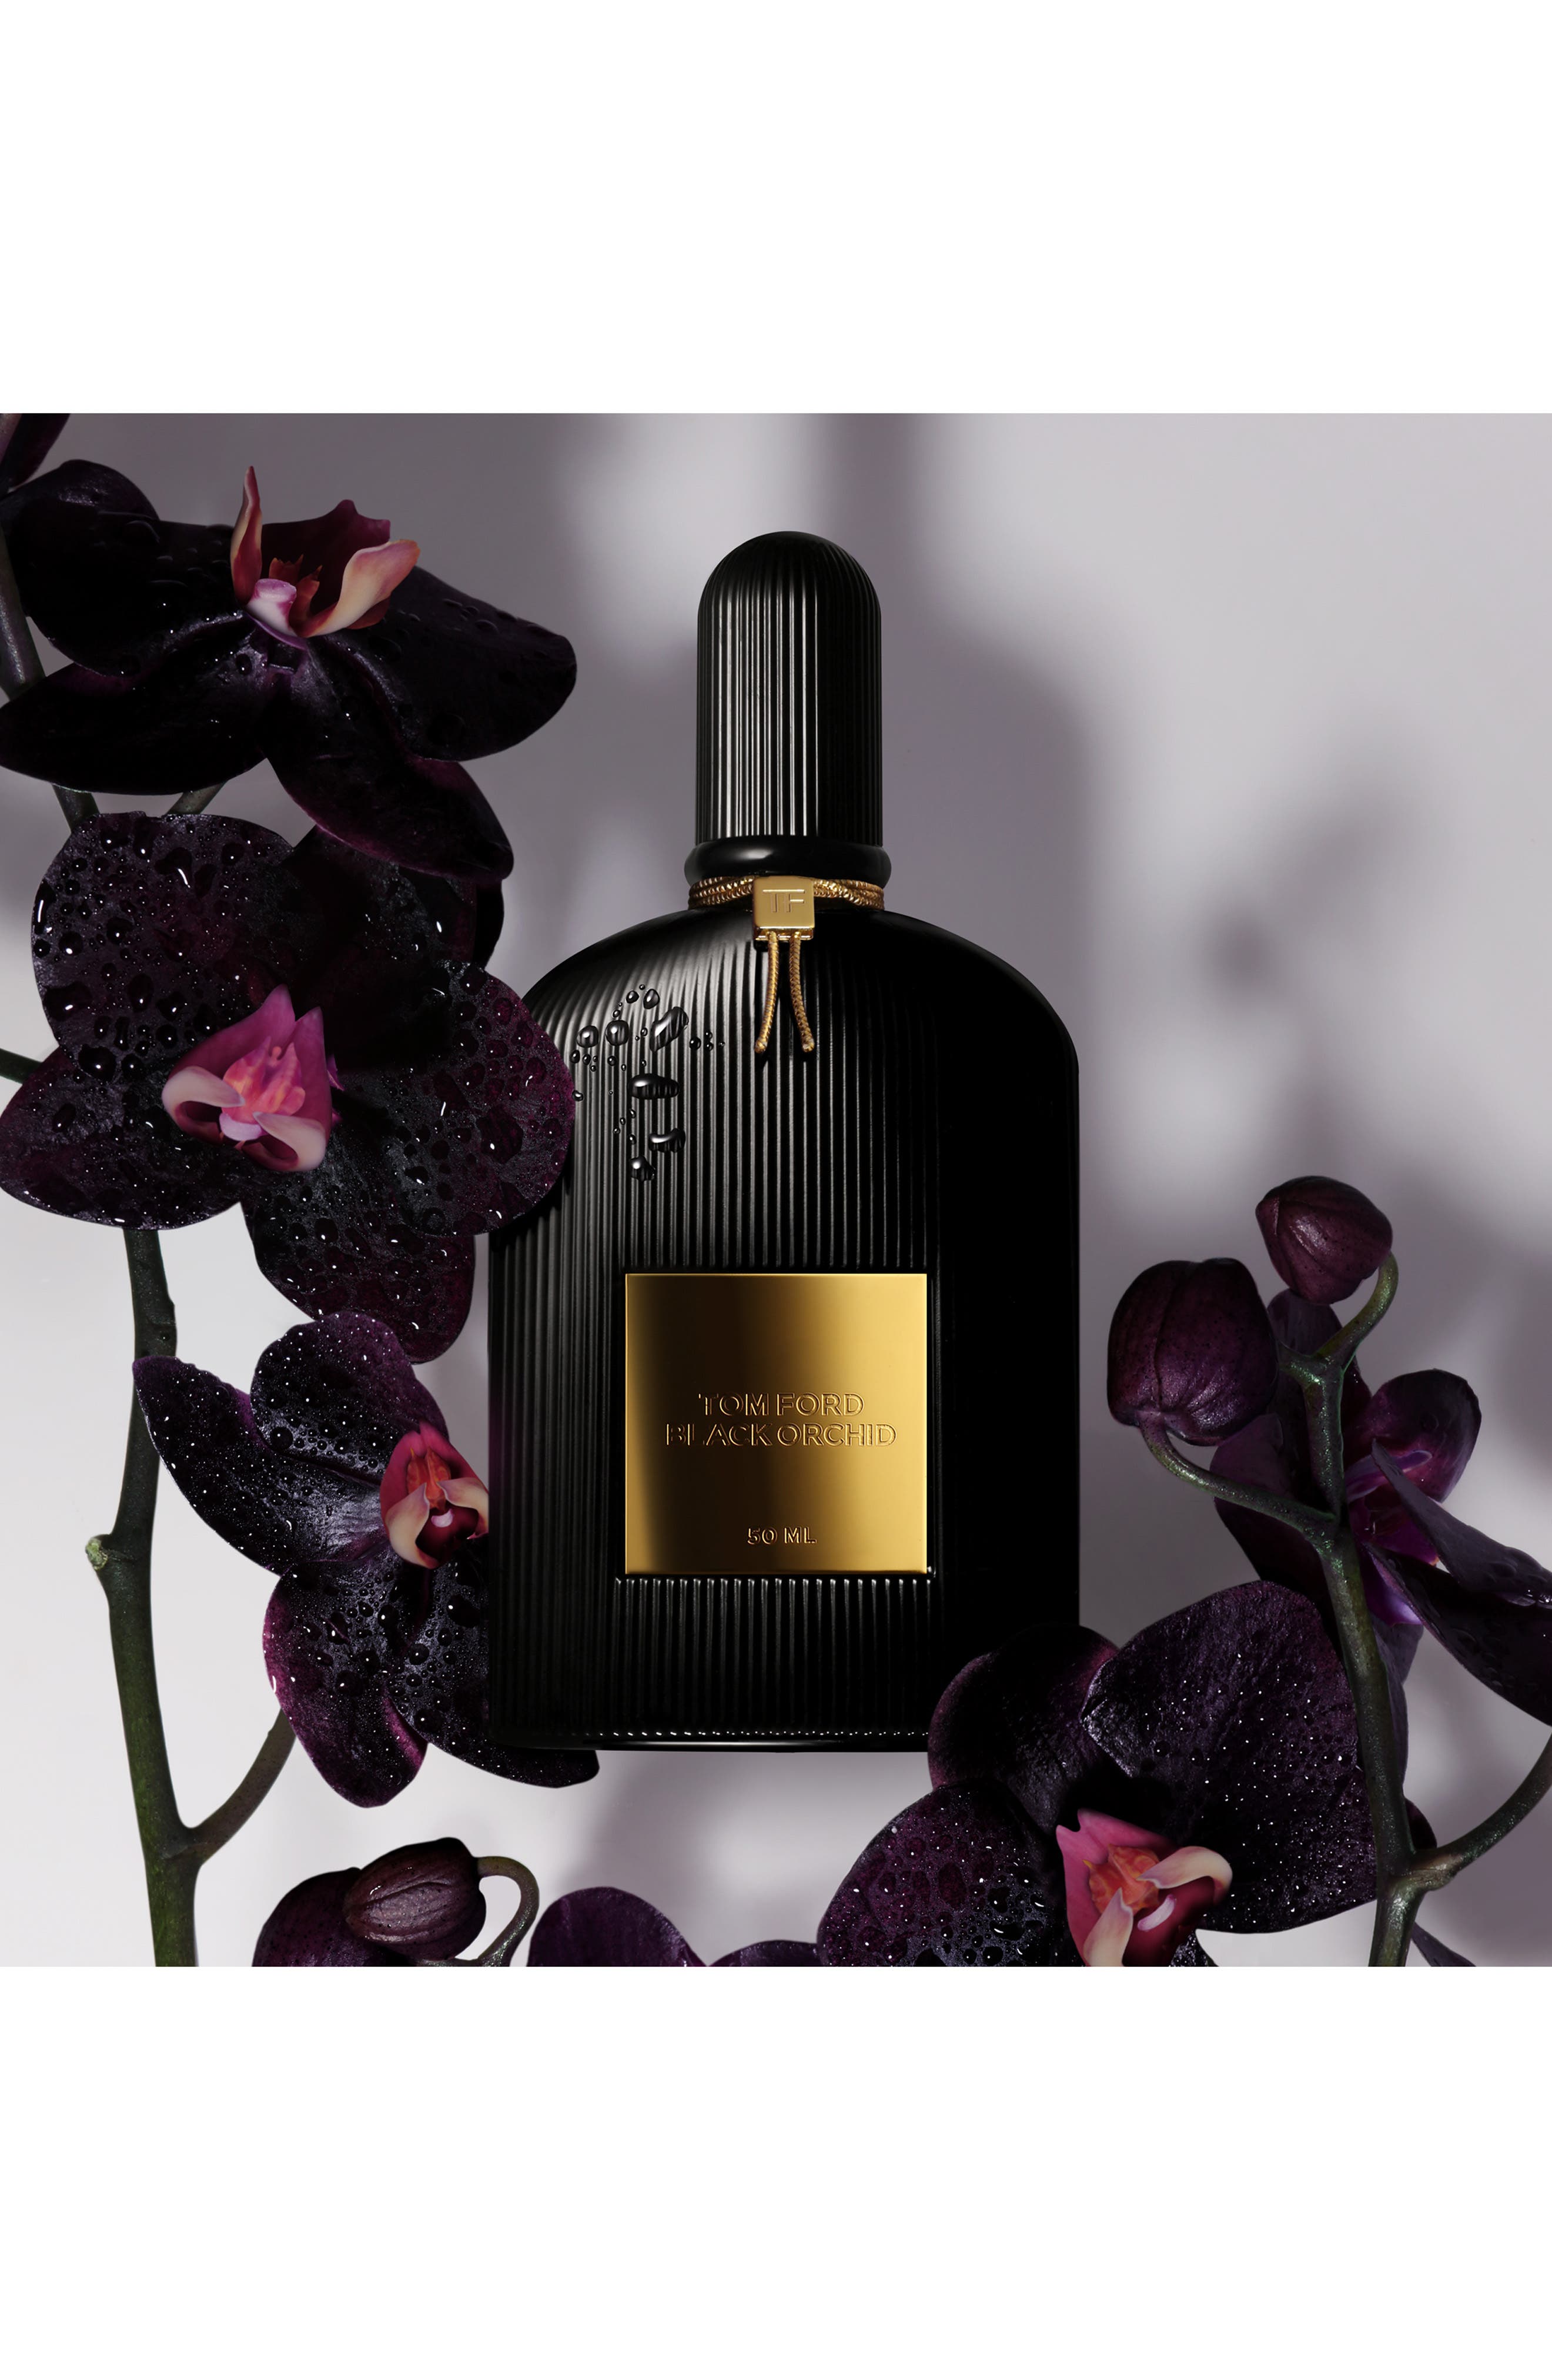 TOM FORD Black Orchid Eau de Parfum Spray 1.7 oz